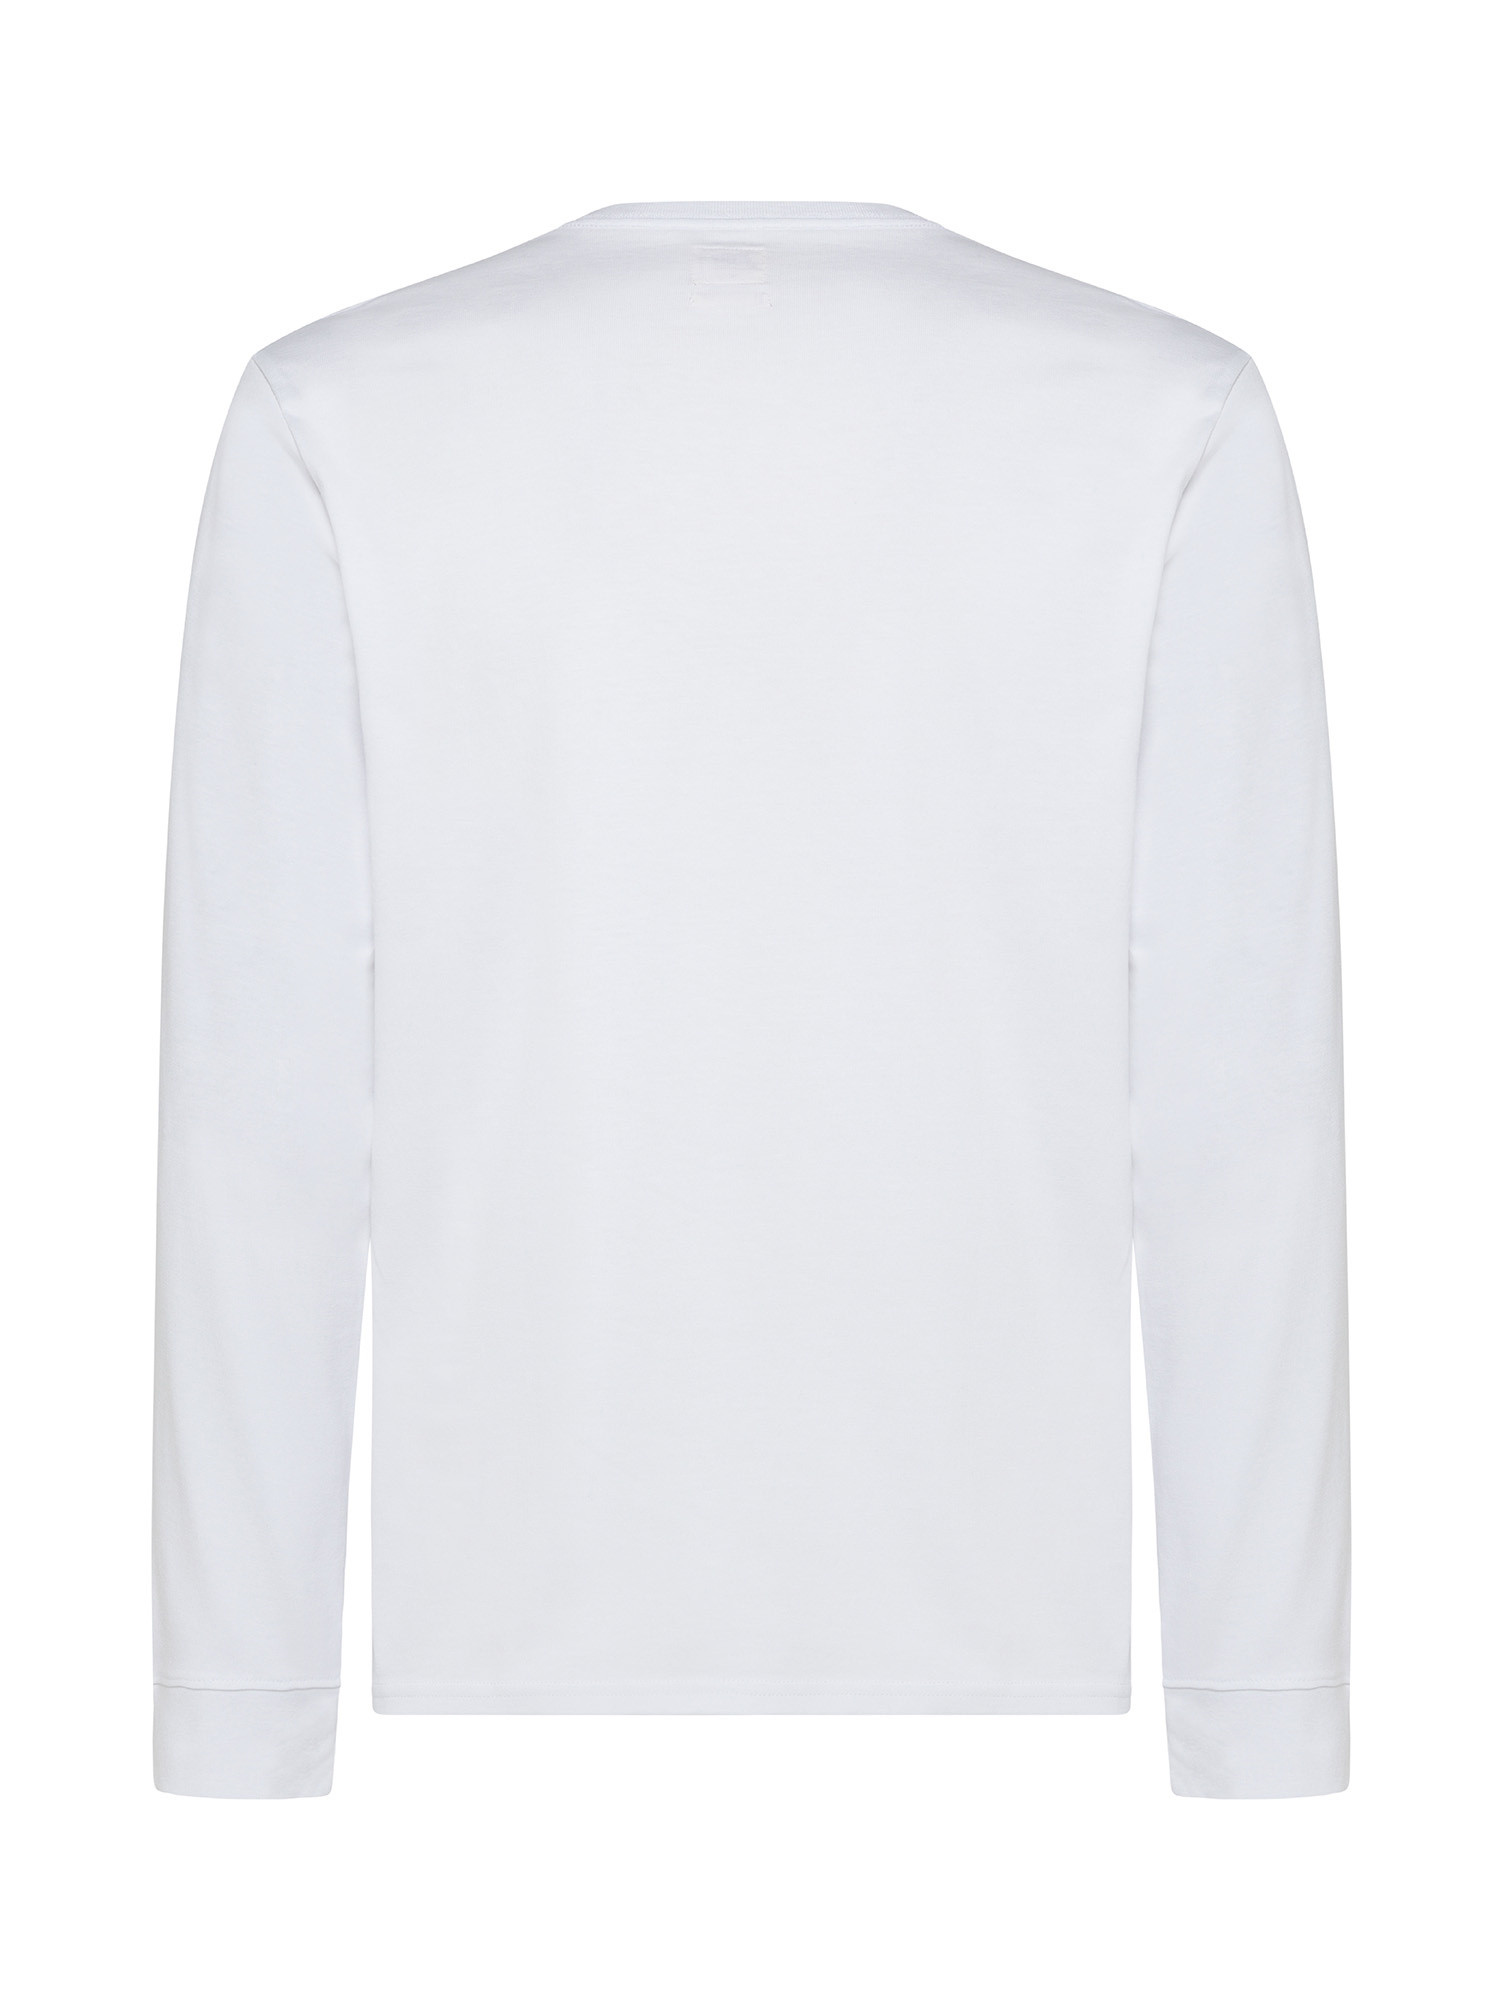 Levi’s - T-shirt girocollo a tinta unita, Bianco, large image number 1